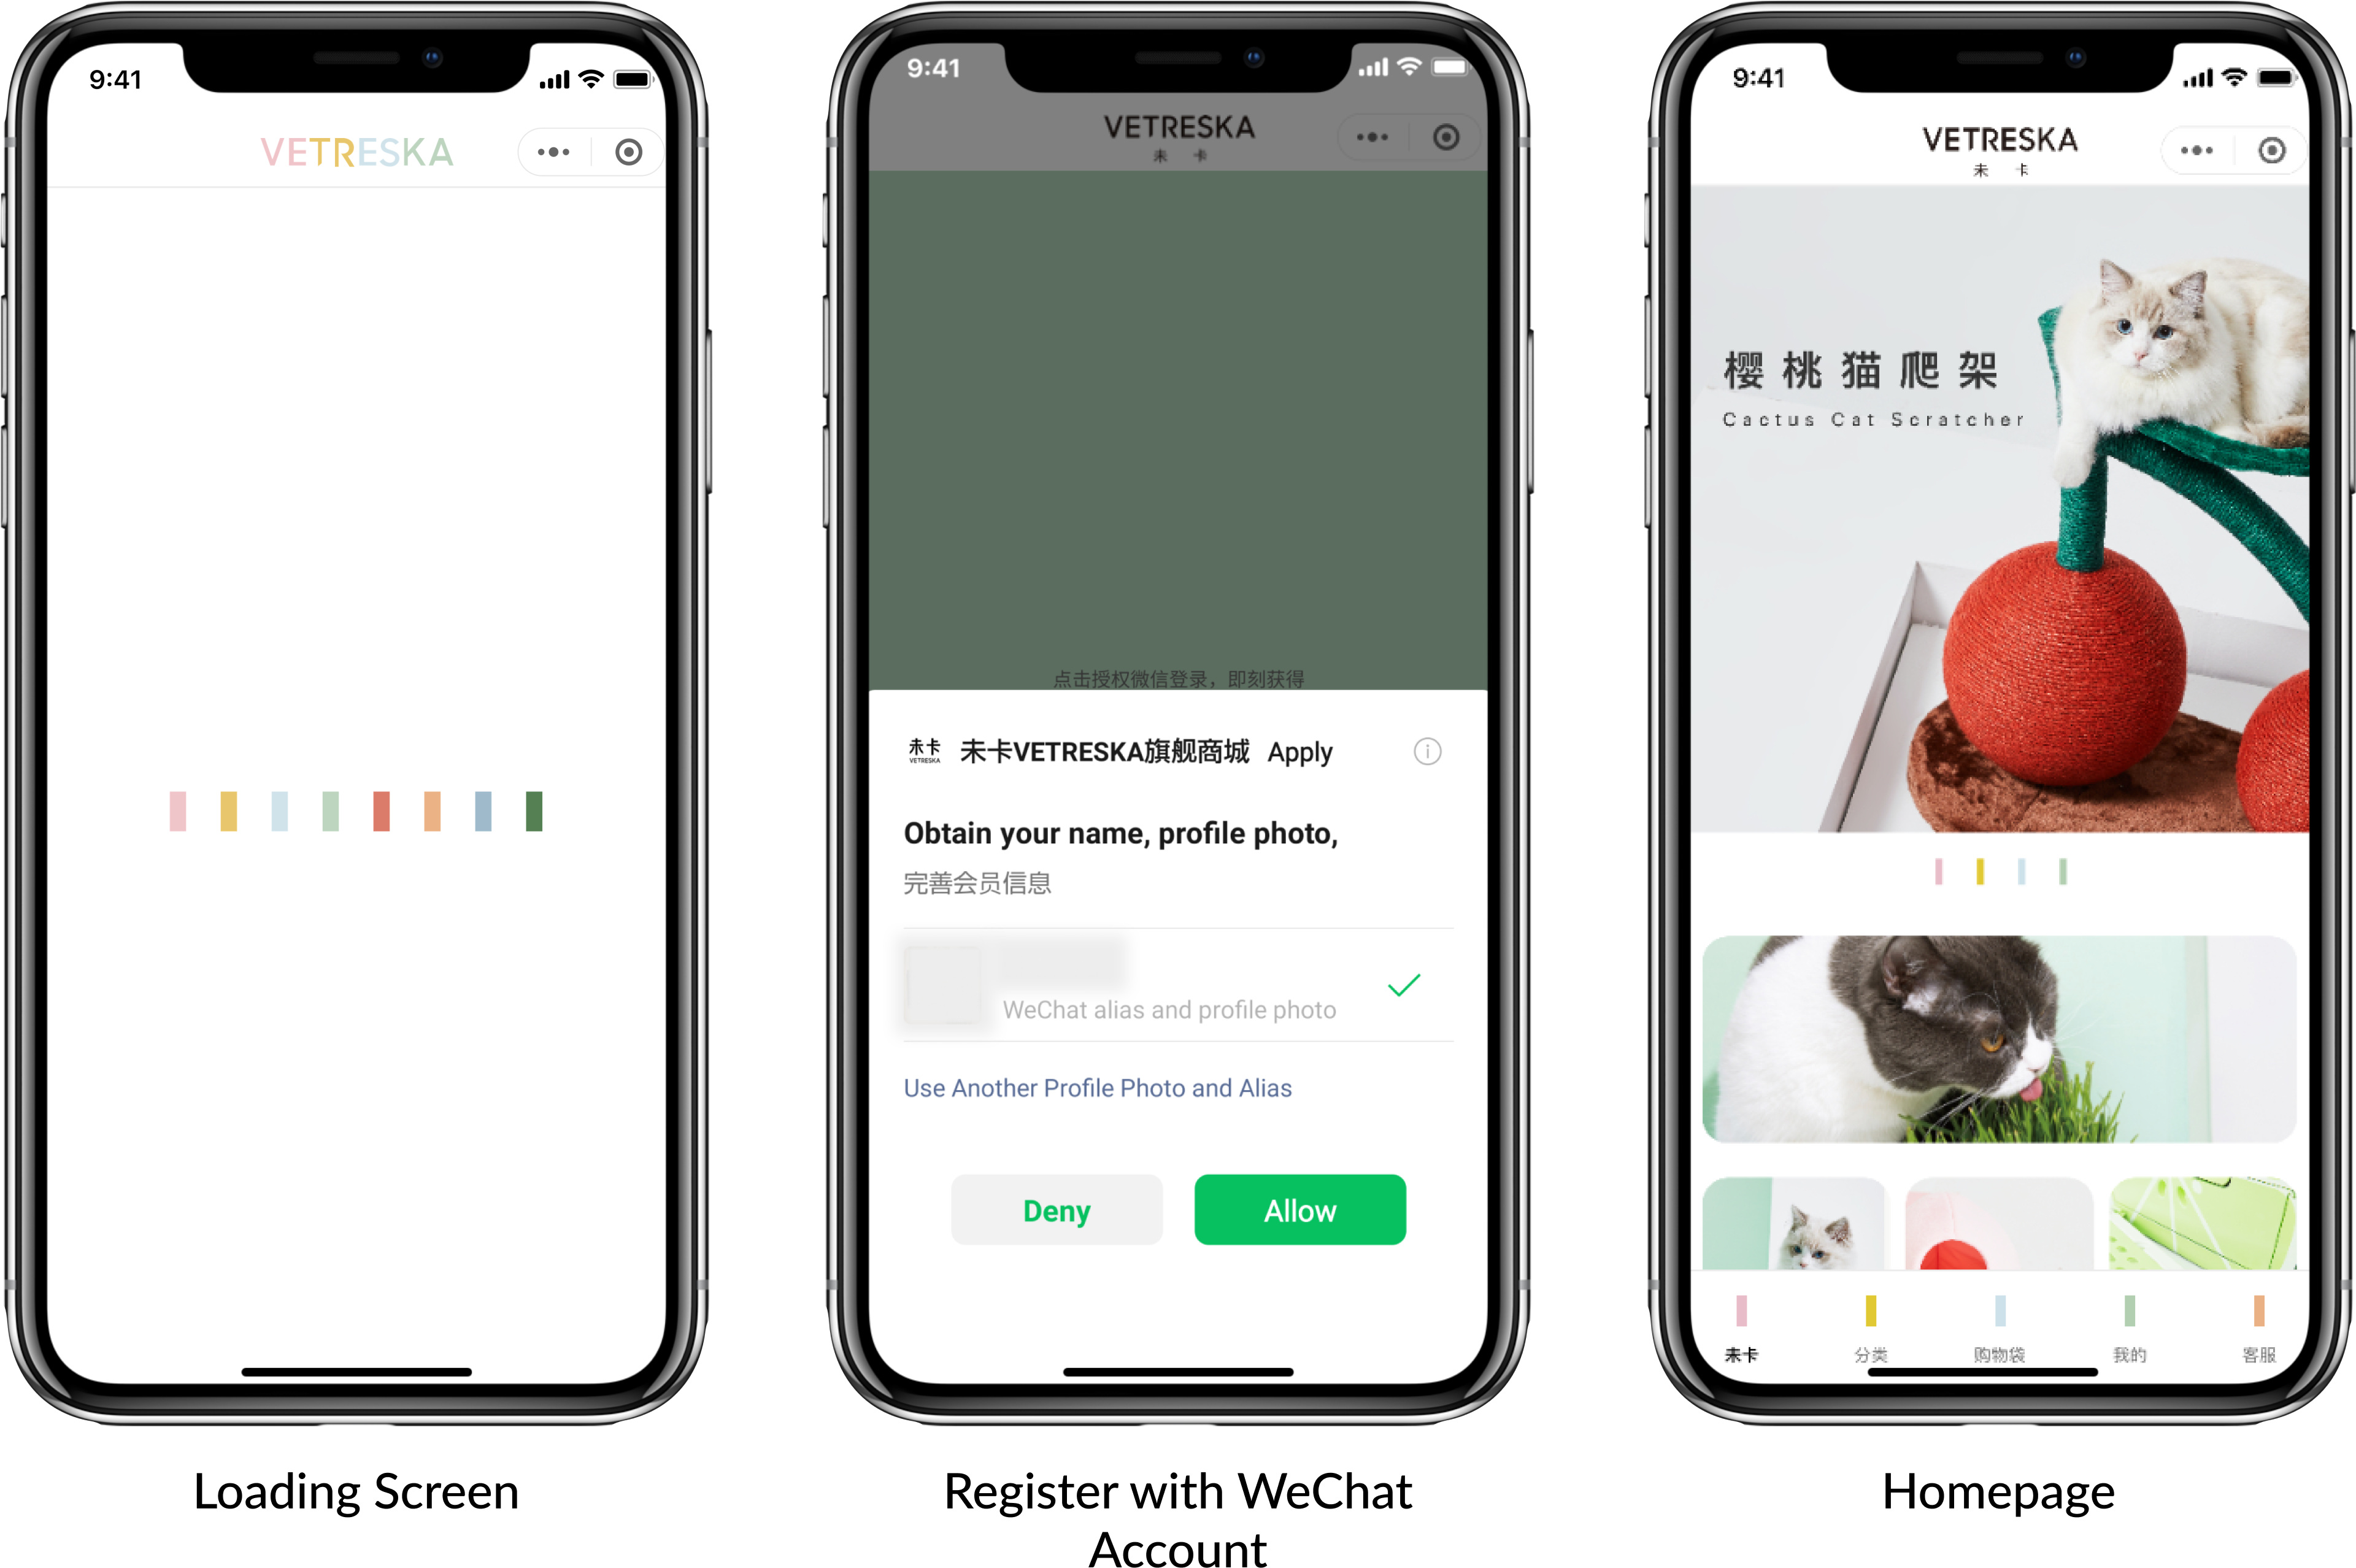 Vetreska ecommerce WeChat Mini Program loading screen, registration page, and Homepage